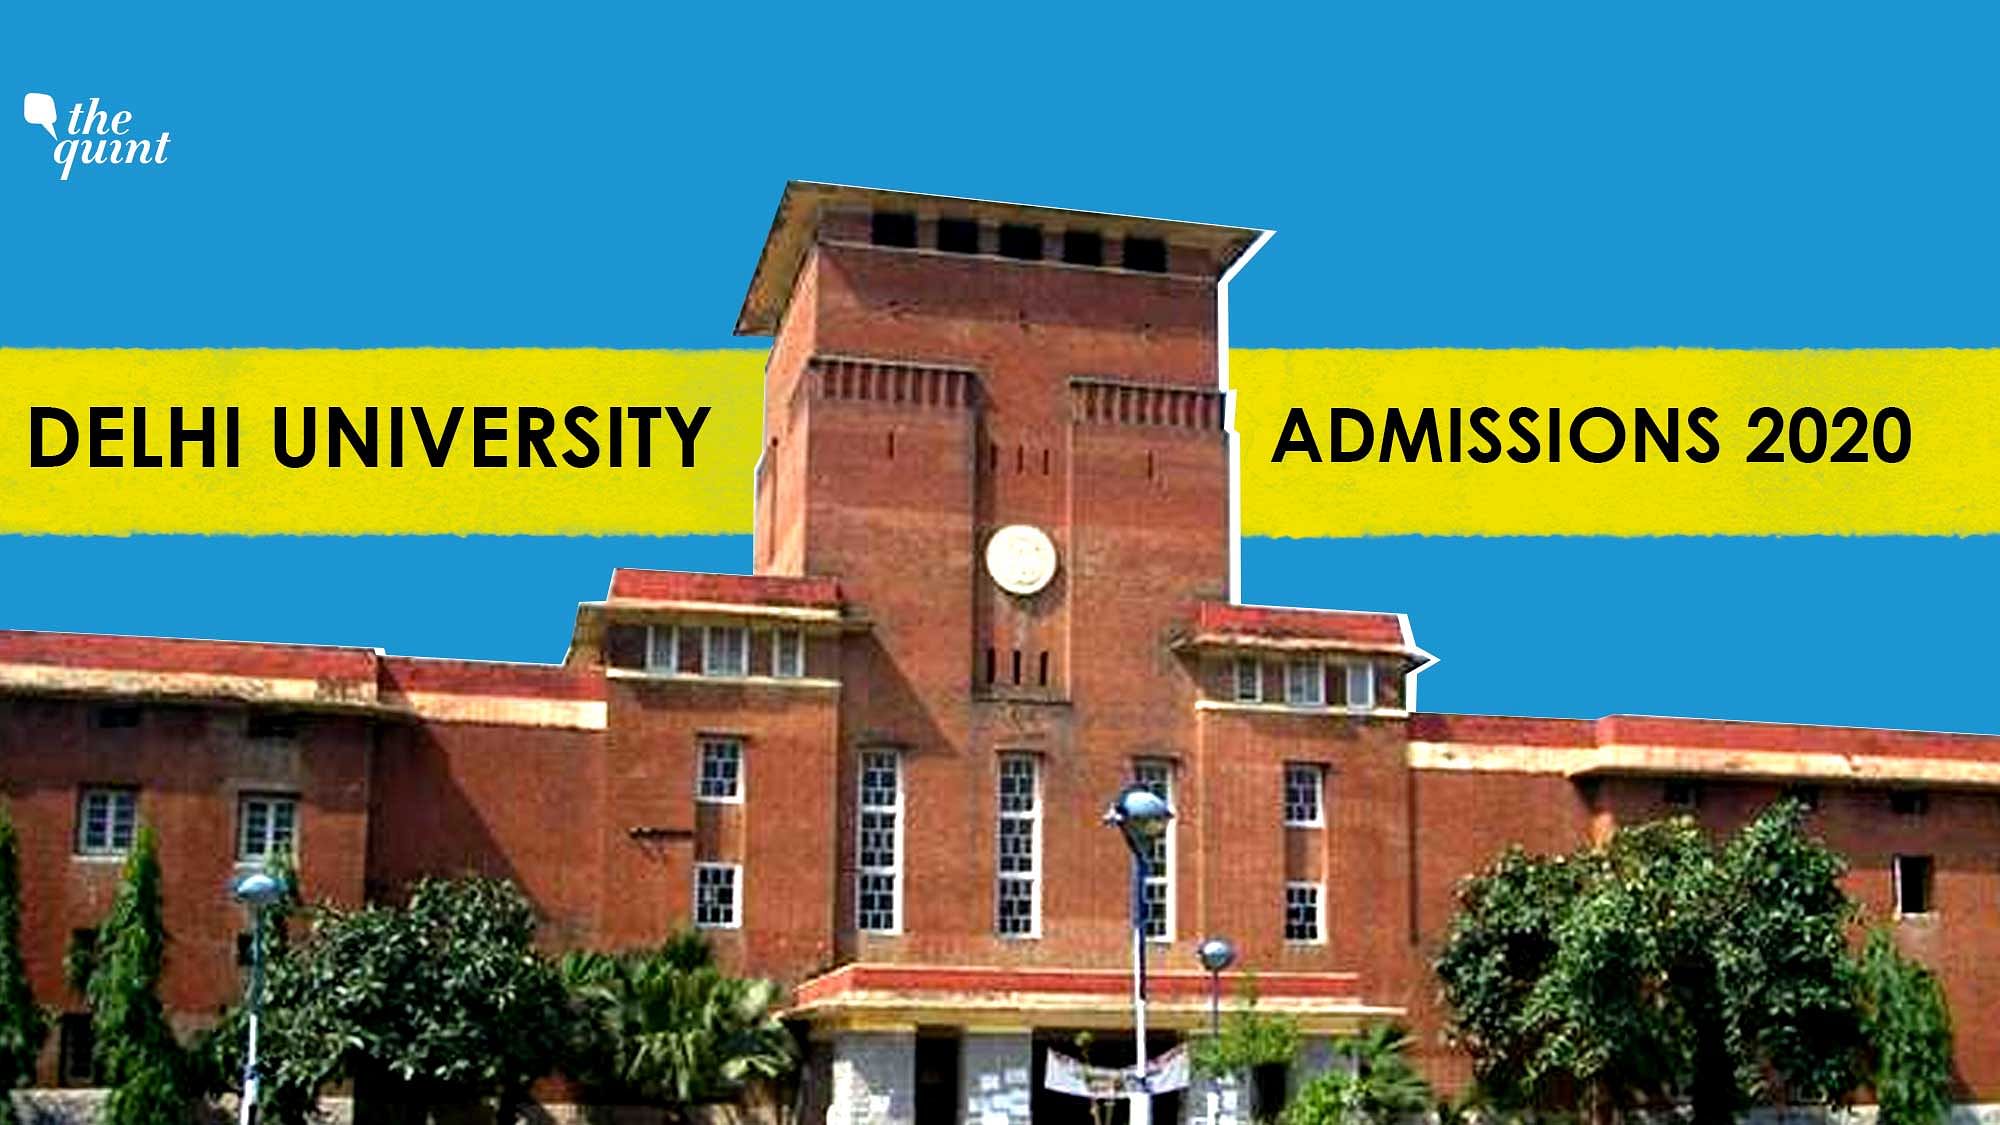 Delhi University Admissions 2020 Nearly Half of UG Seats Filled